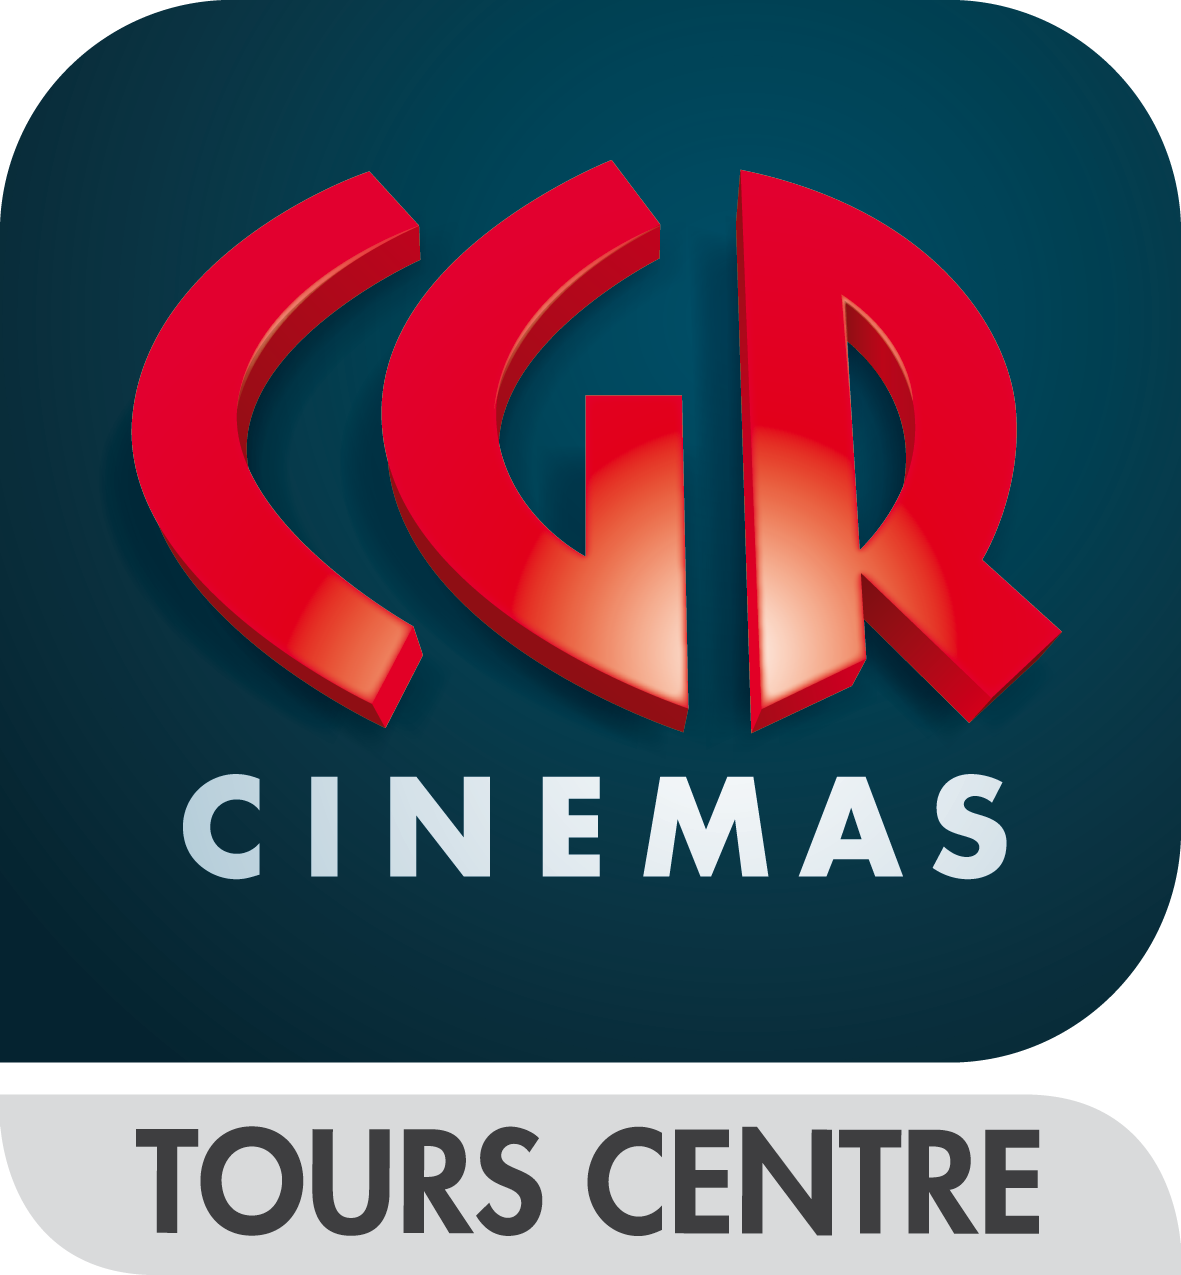 Cinema Tours 37